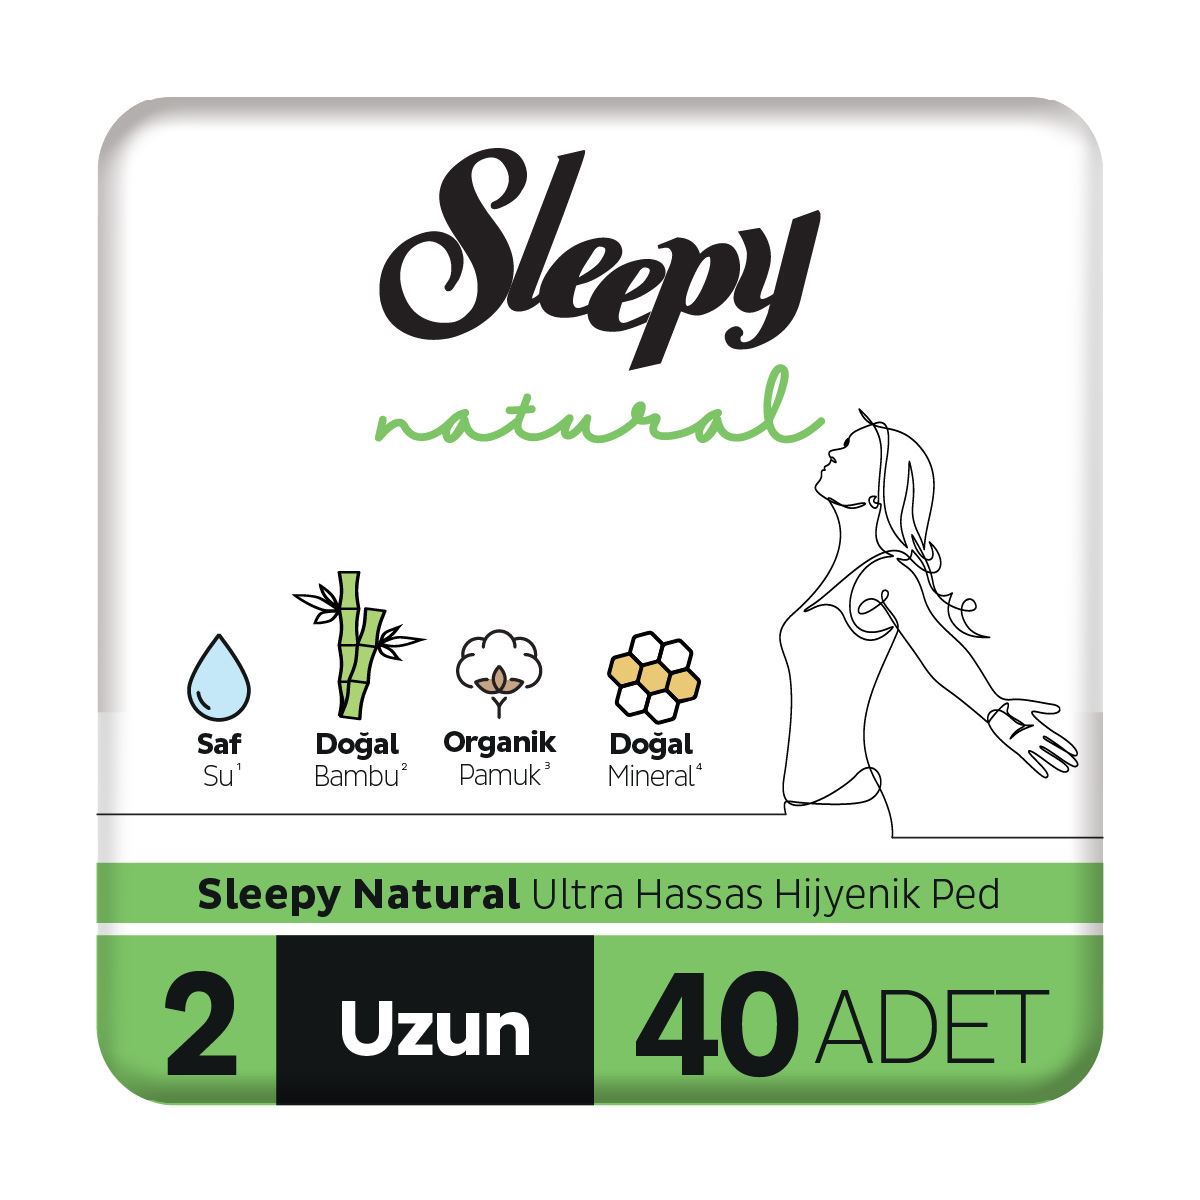 Sleepy Natural Ultra Hassas Hijyenik Ped Uzun 40 Adet Ped